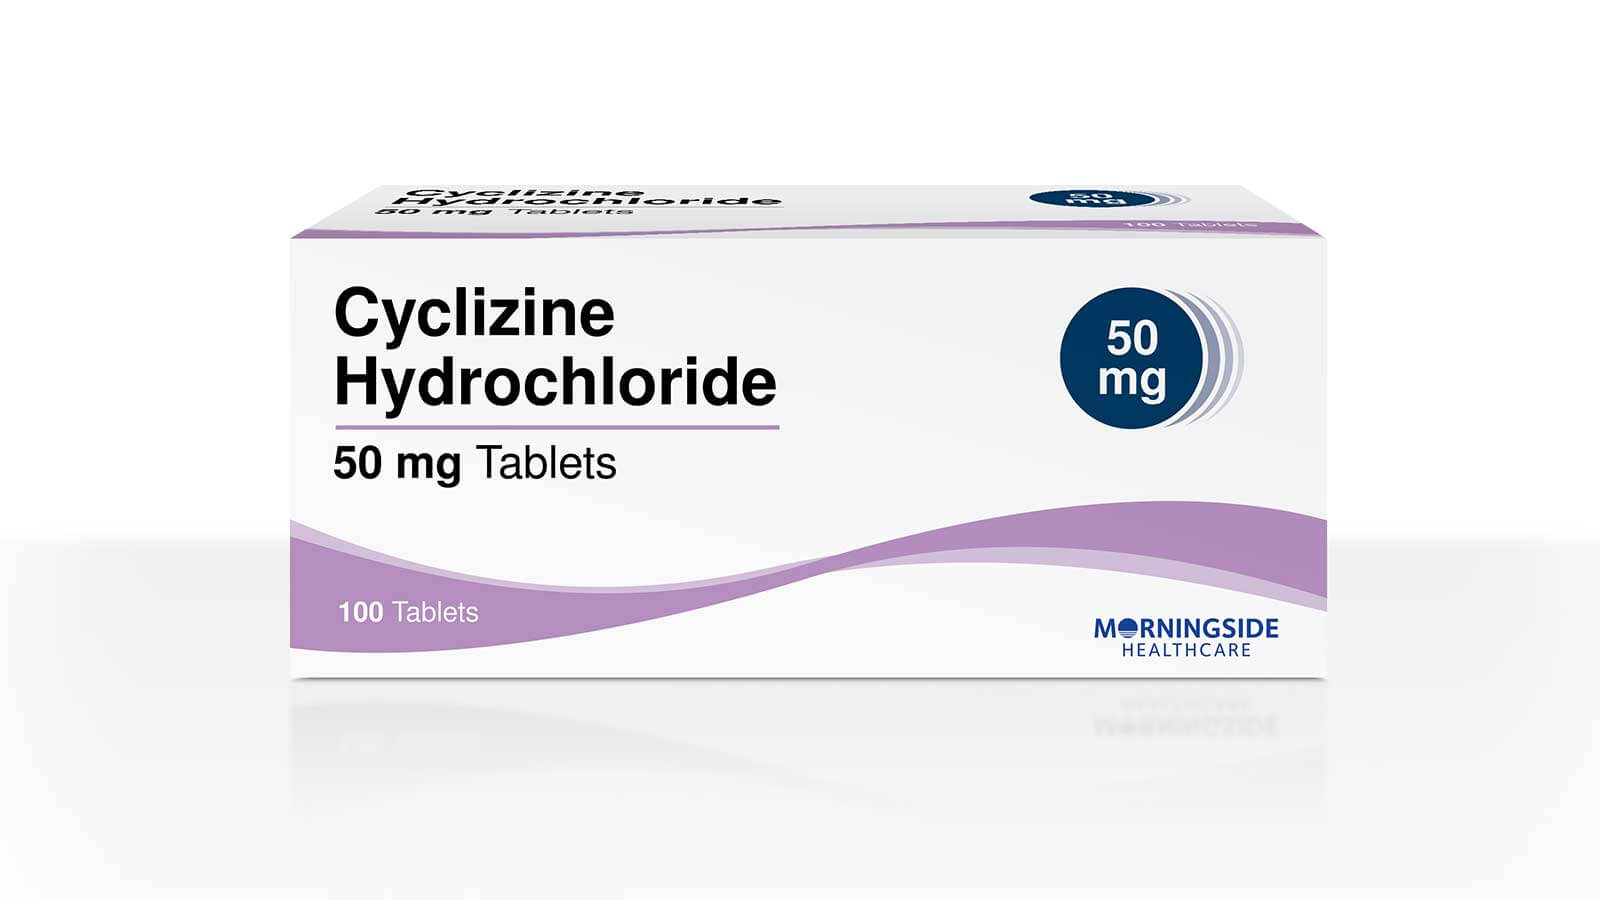 Cyclizine Hydrochloride Tablets